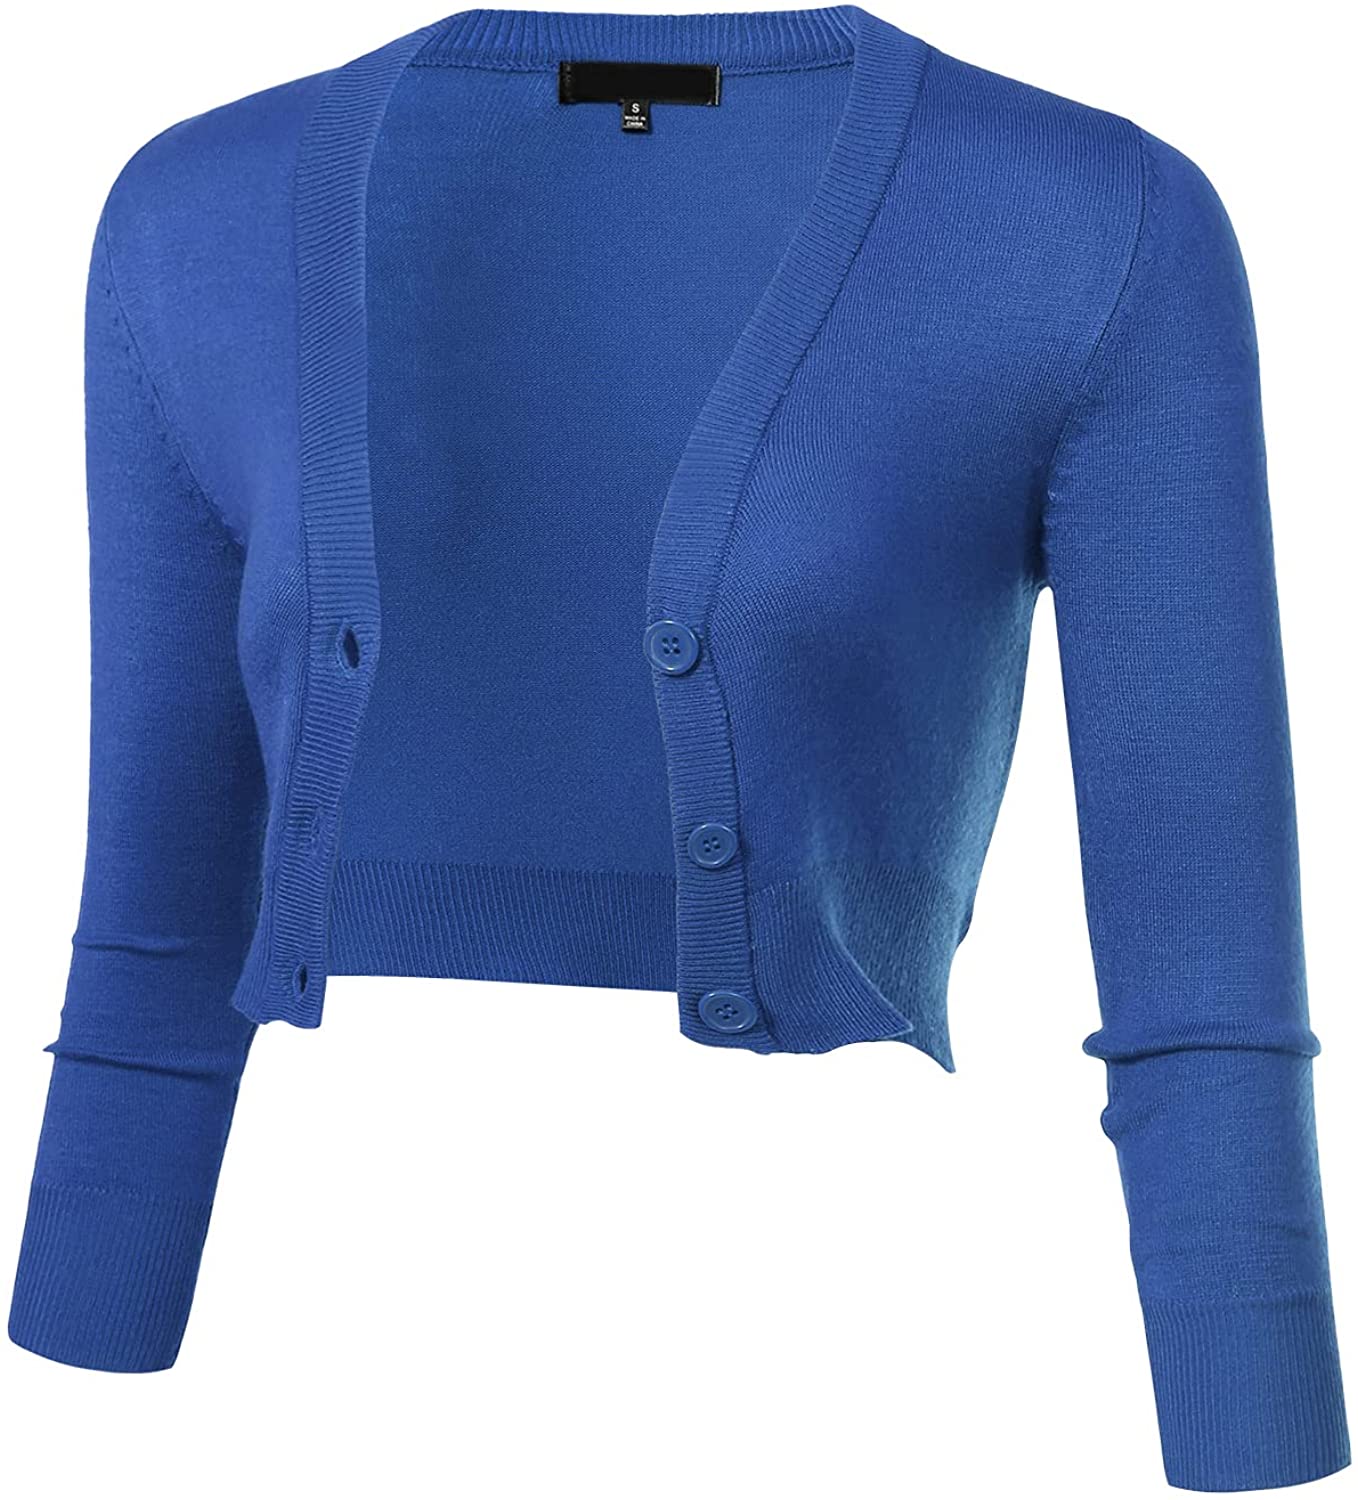 Women's Solid Button Down 3/4 Sleeve Cropped Bolero Cardigans (S-4XL) | eBay